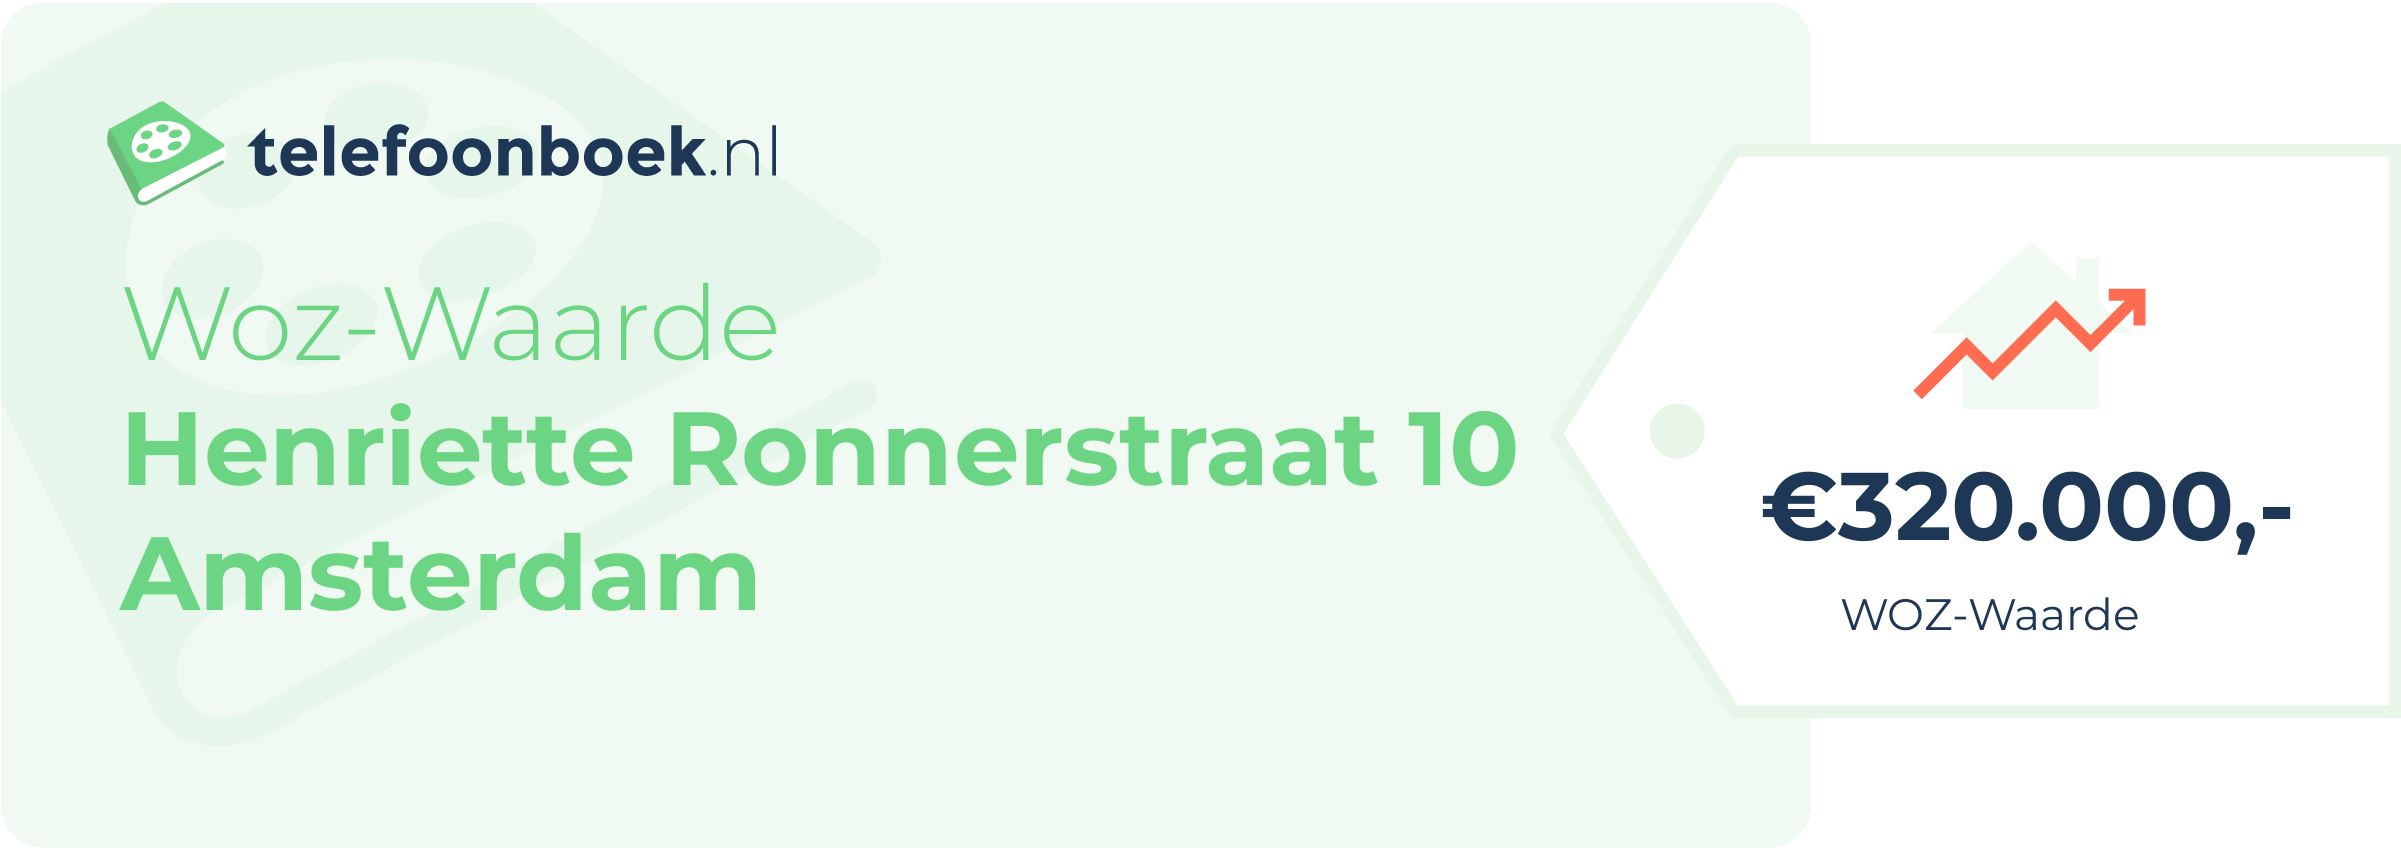 WOZ-waarde Henriette Ronnerstraat 10 Amsterdam